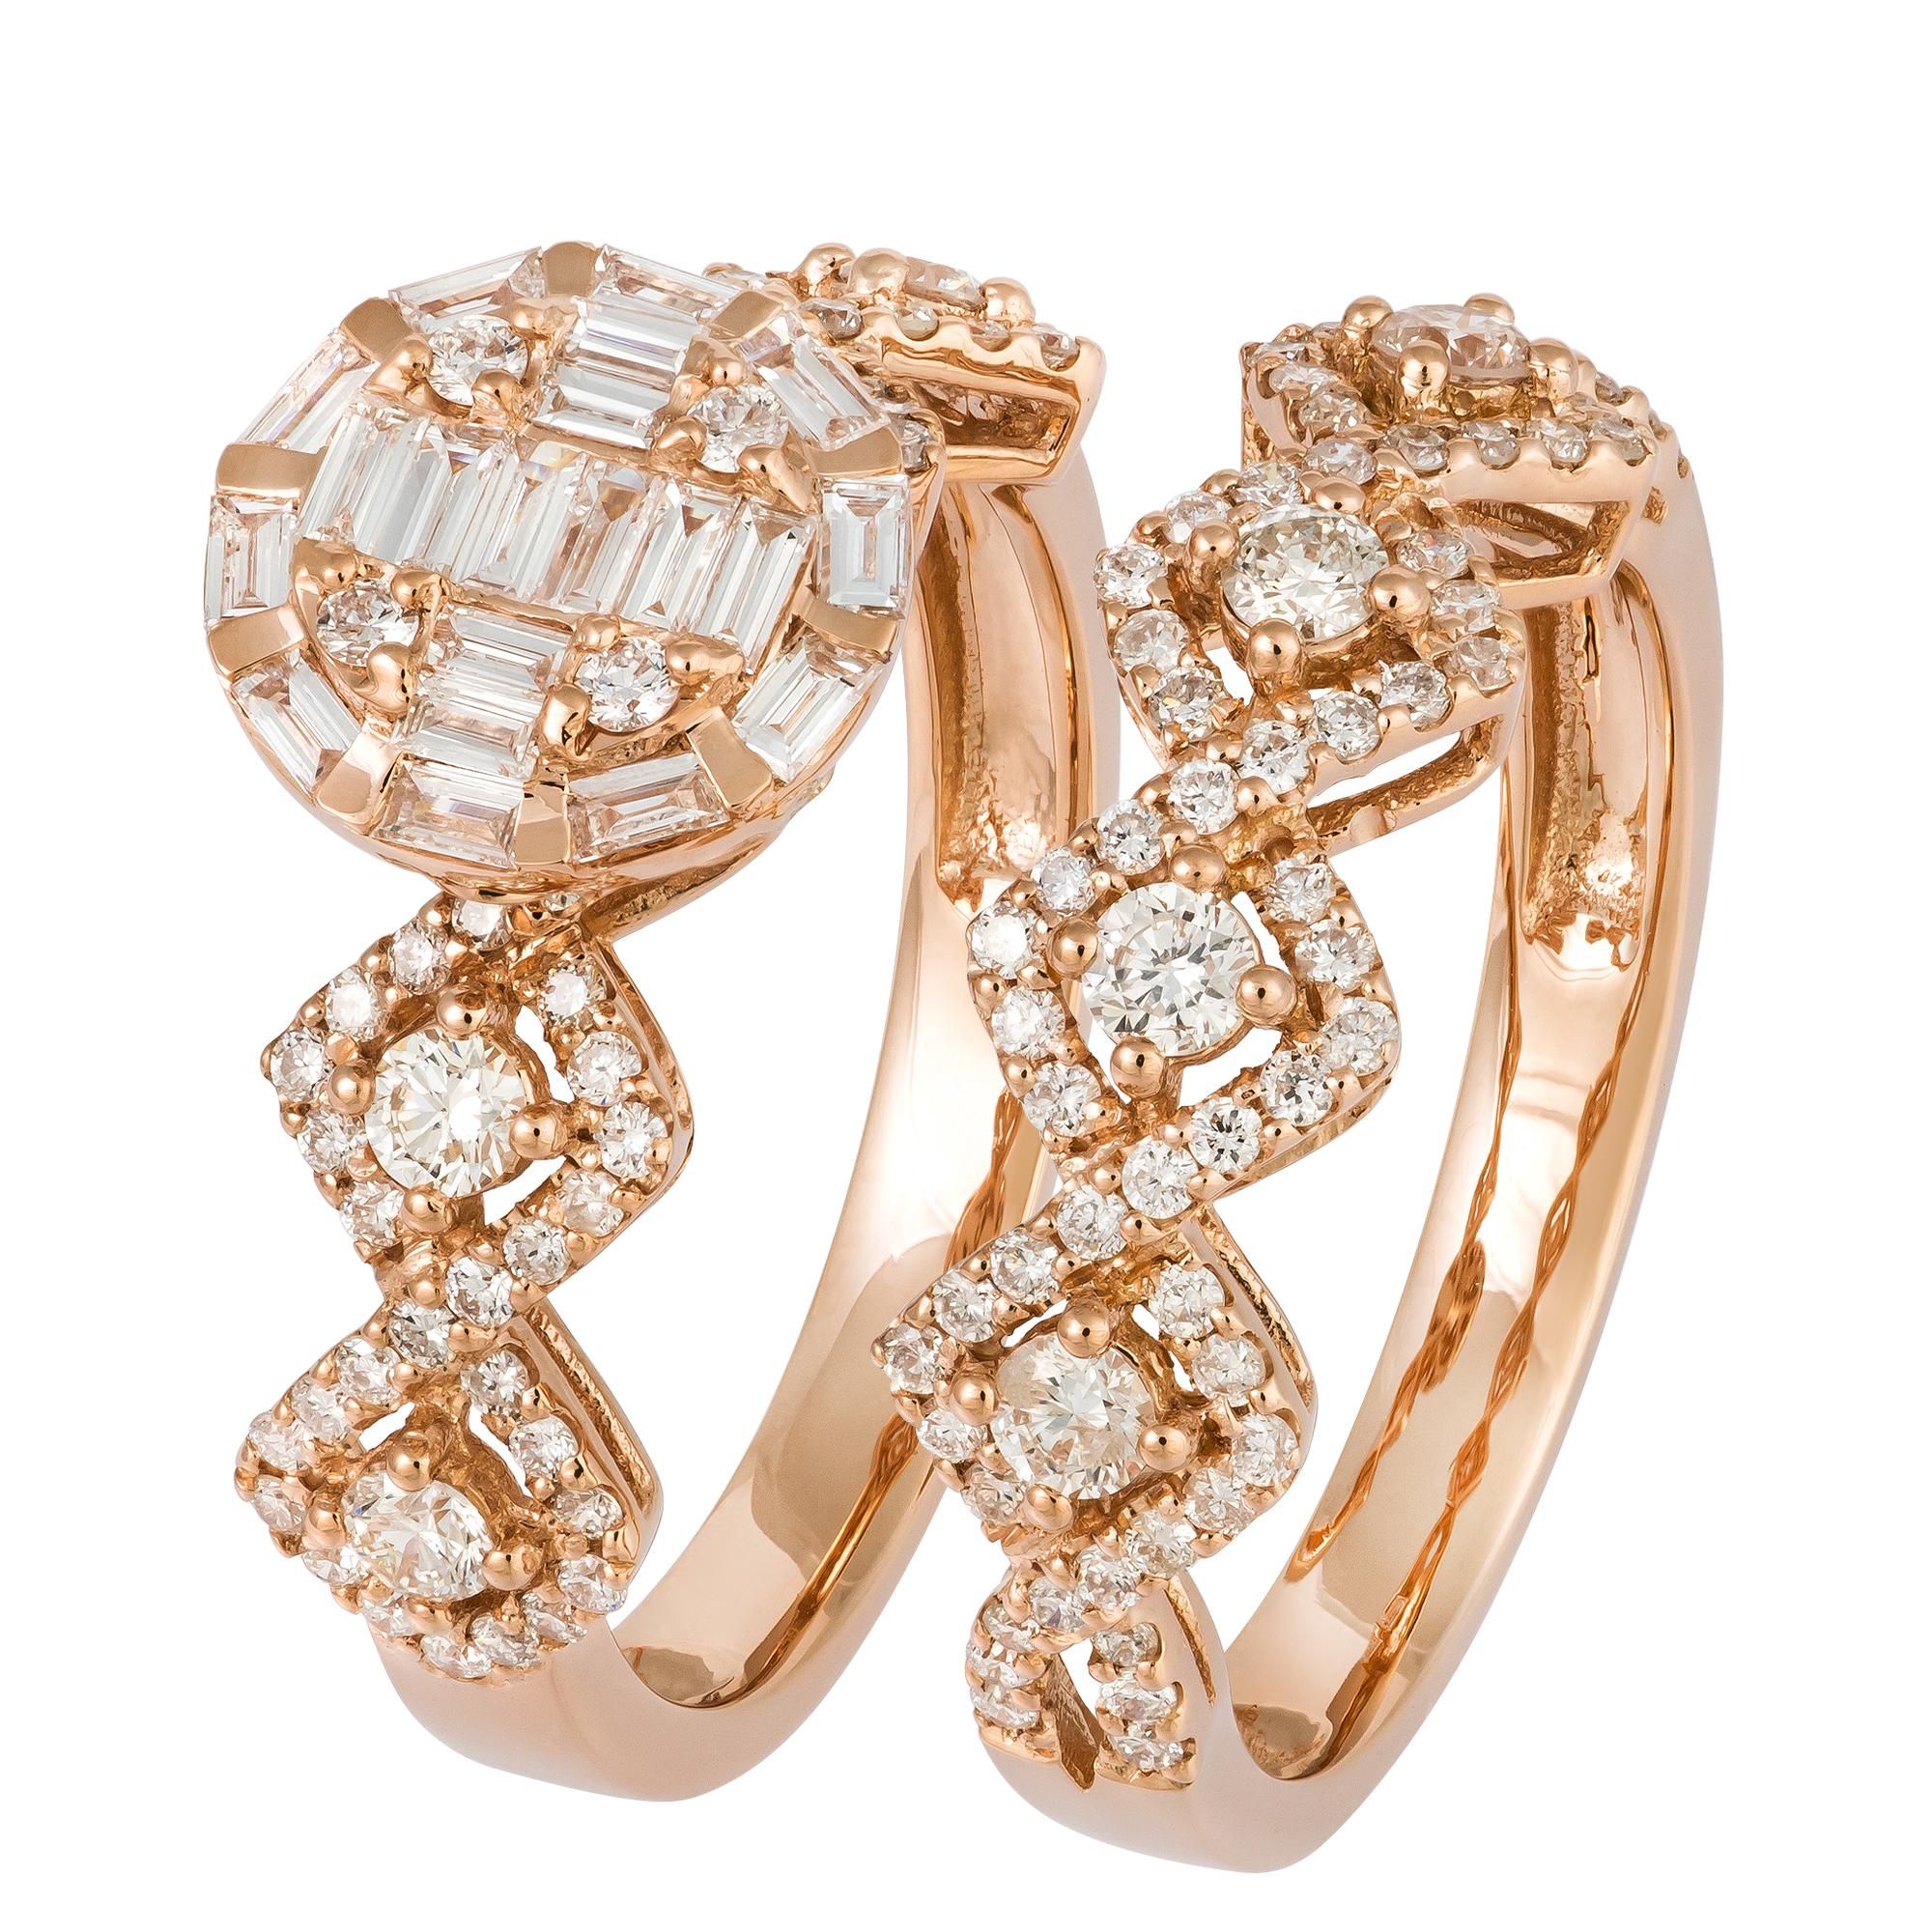 For Sale:  Impressive Pink 18K Gold White Diamond Ring For Her 3